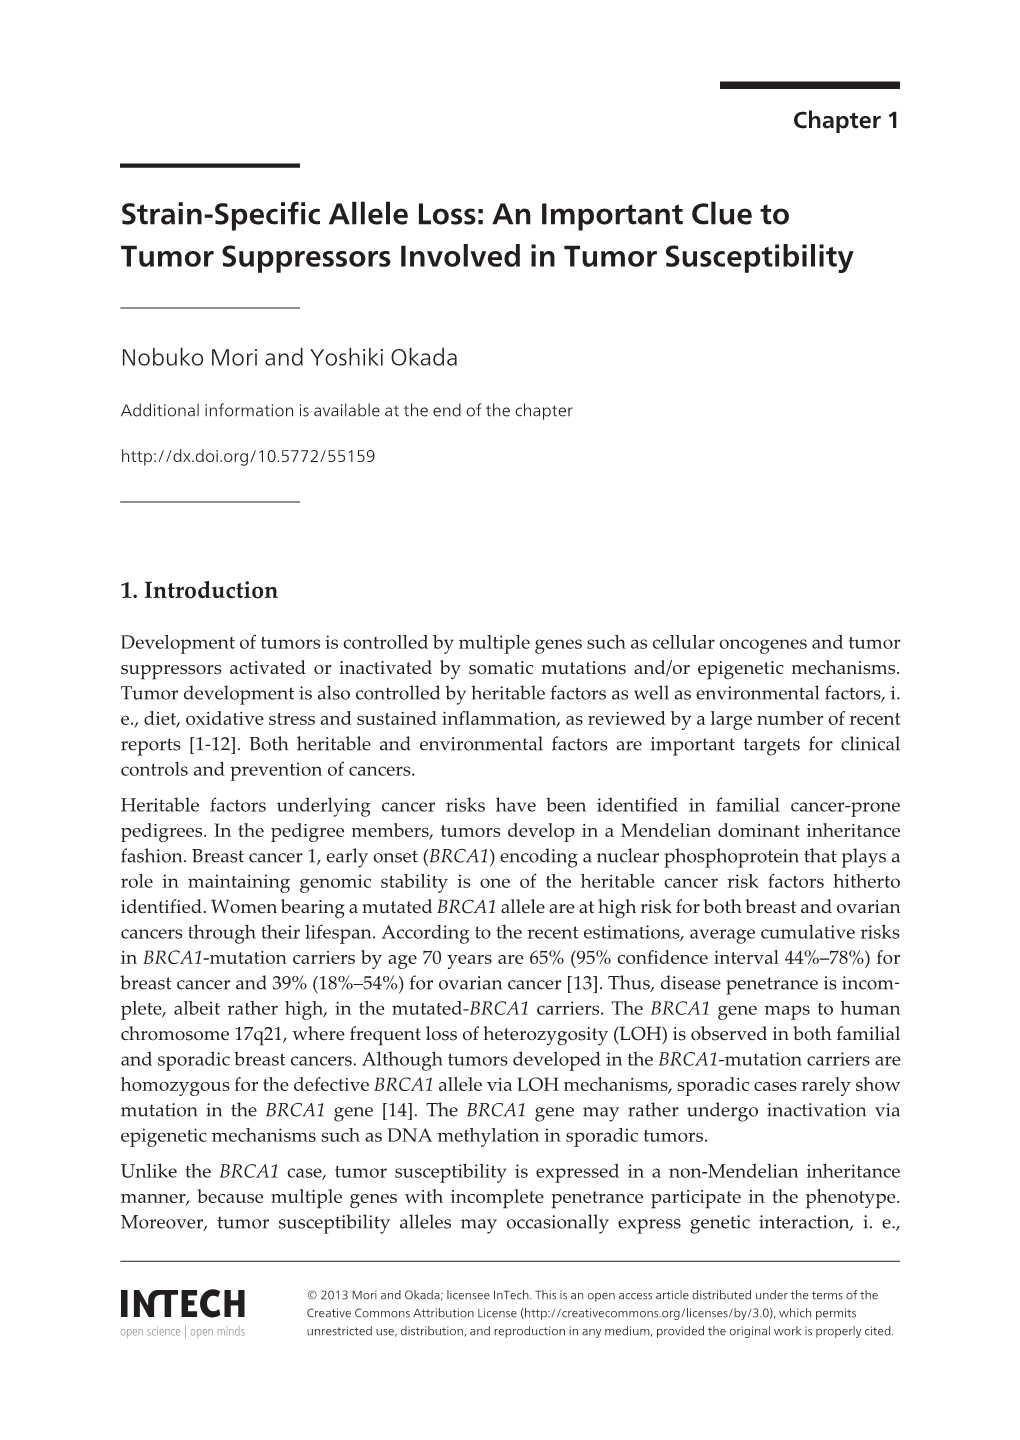 Strain-Specific Allele Loss: an Important Clue to Tumor Suppressors Involved in Tumor Susceptibility